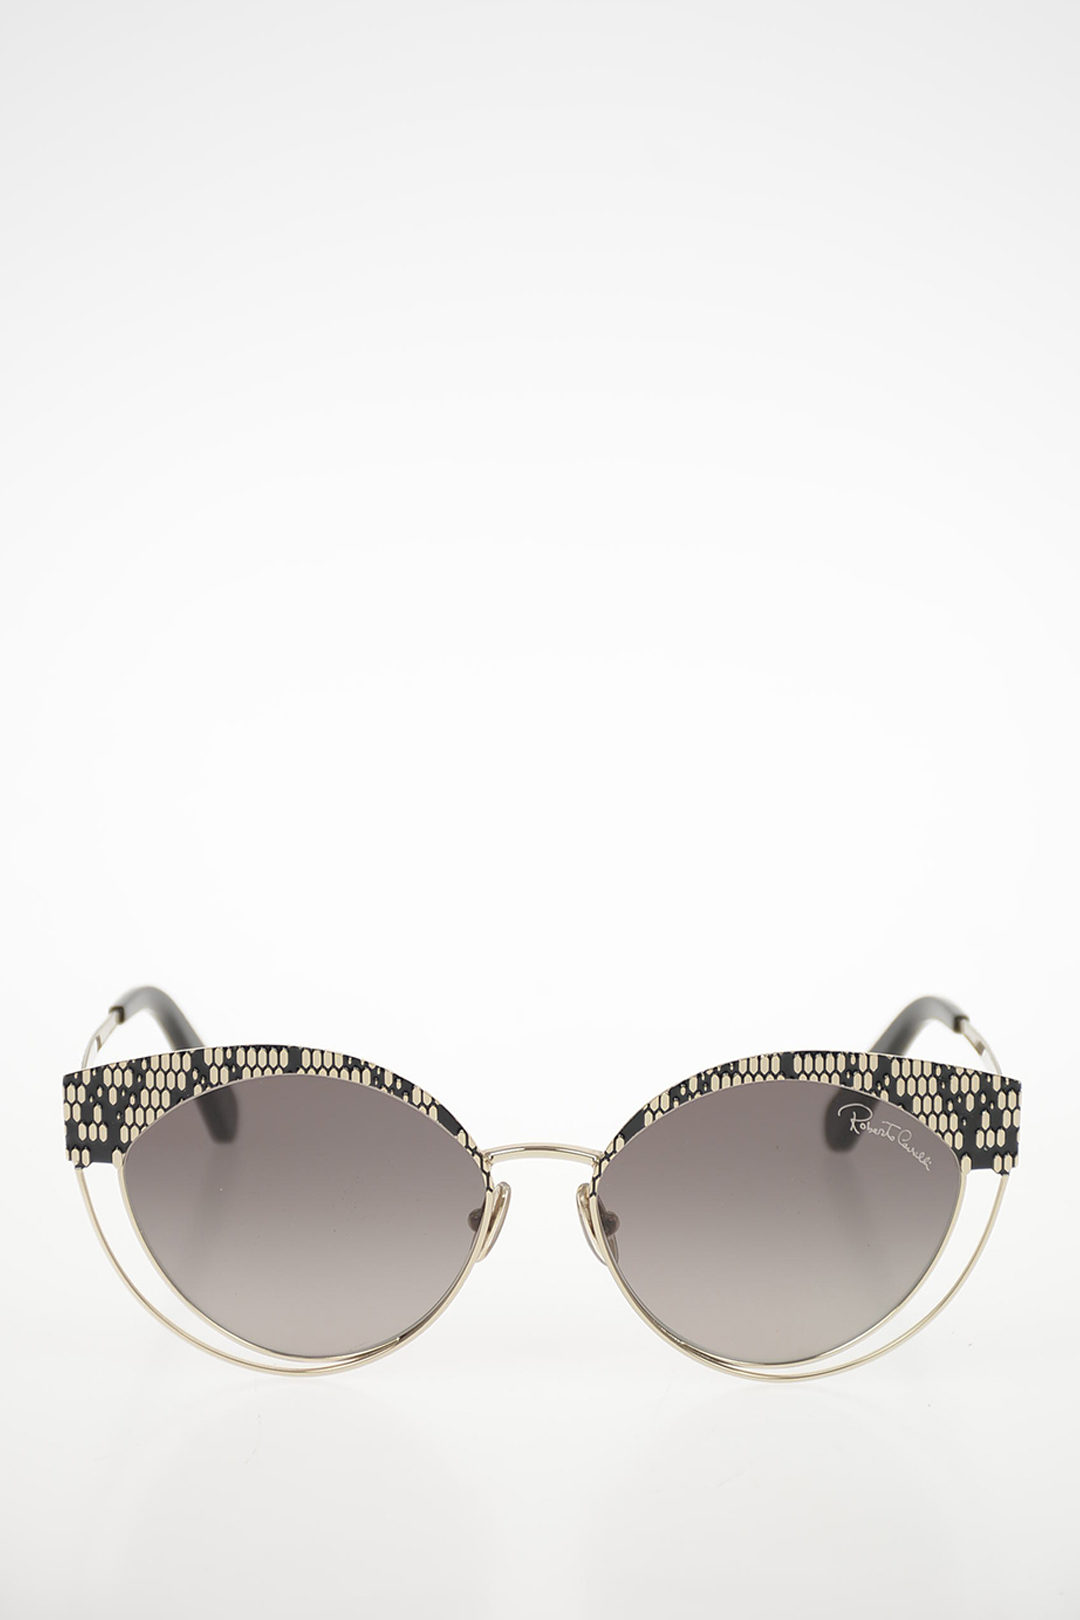 Roberto Cavalli Sunglasses for Women